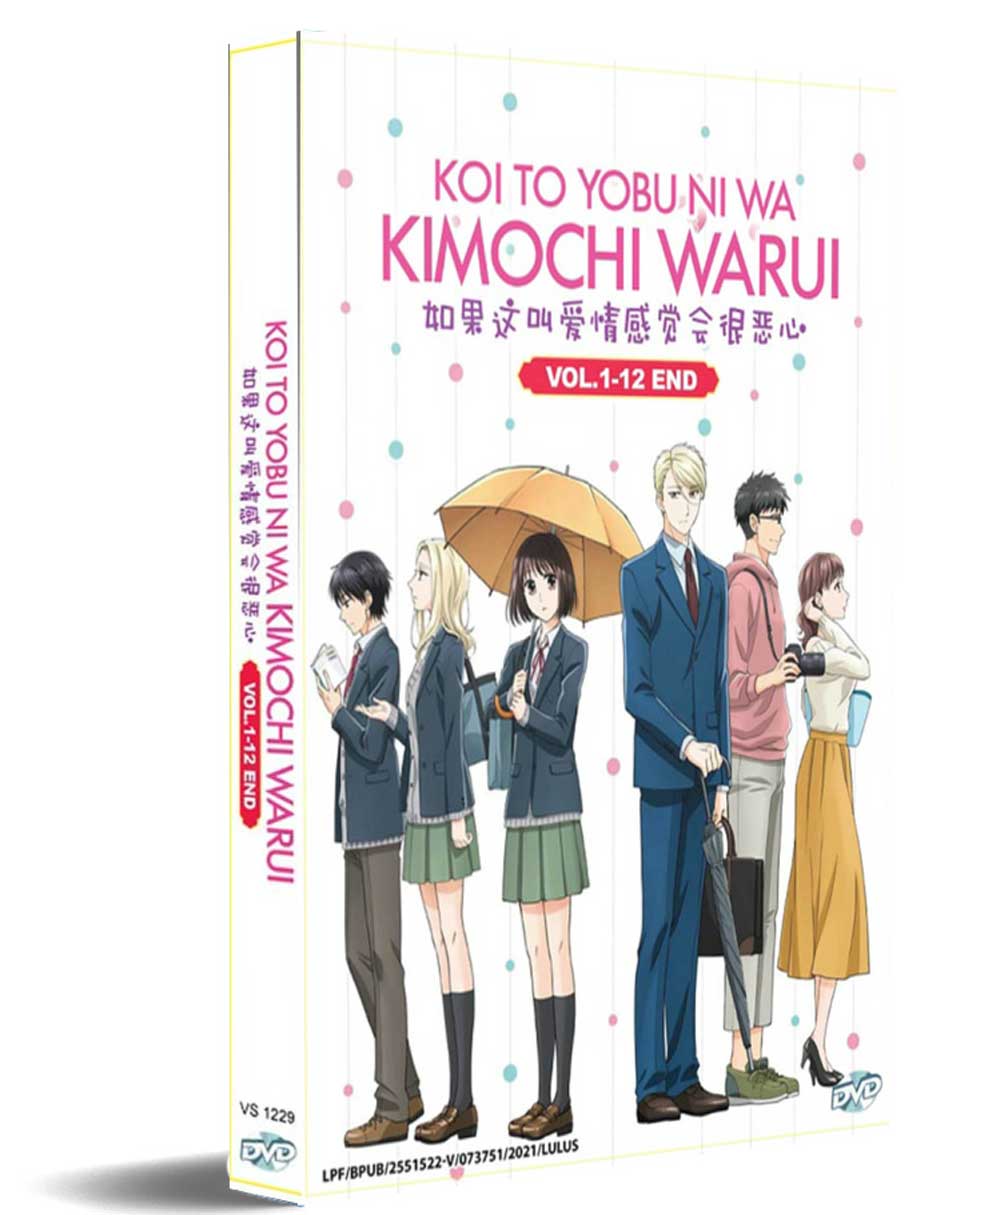 Koi to Yobu ni wa Kimochi Warui Anime Fabric Wall Scroll Poster (32 x 40)  Inches [A] Koi to Yobu ni wa- 2(L)